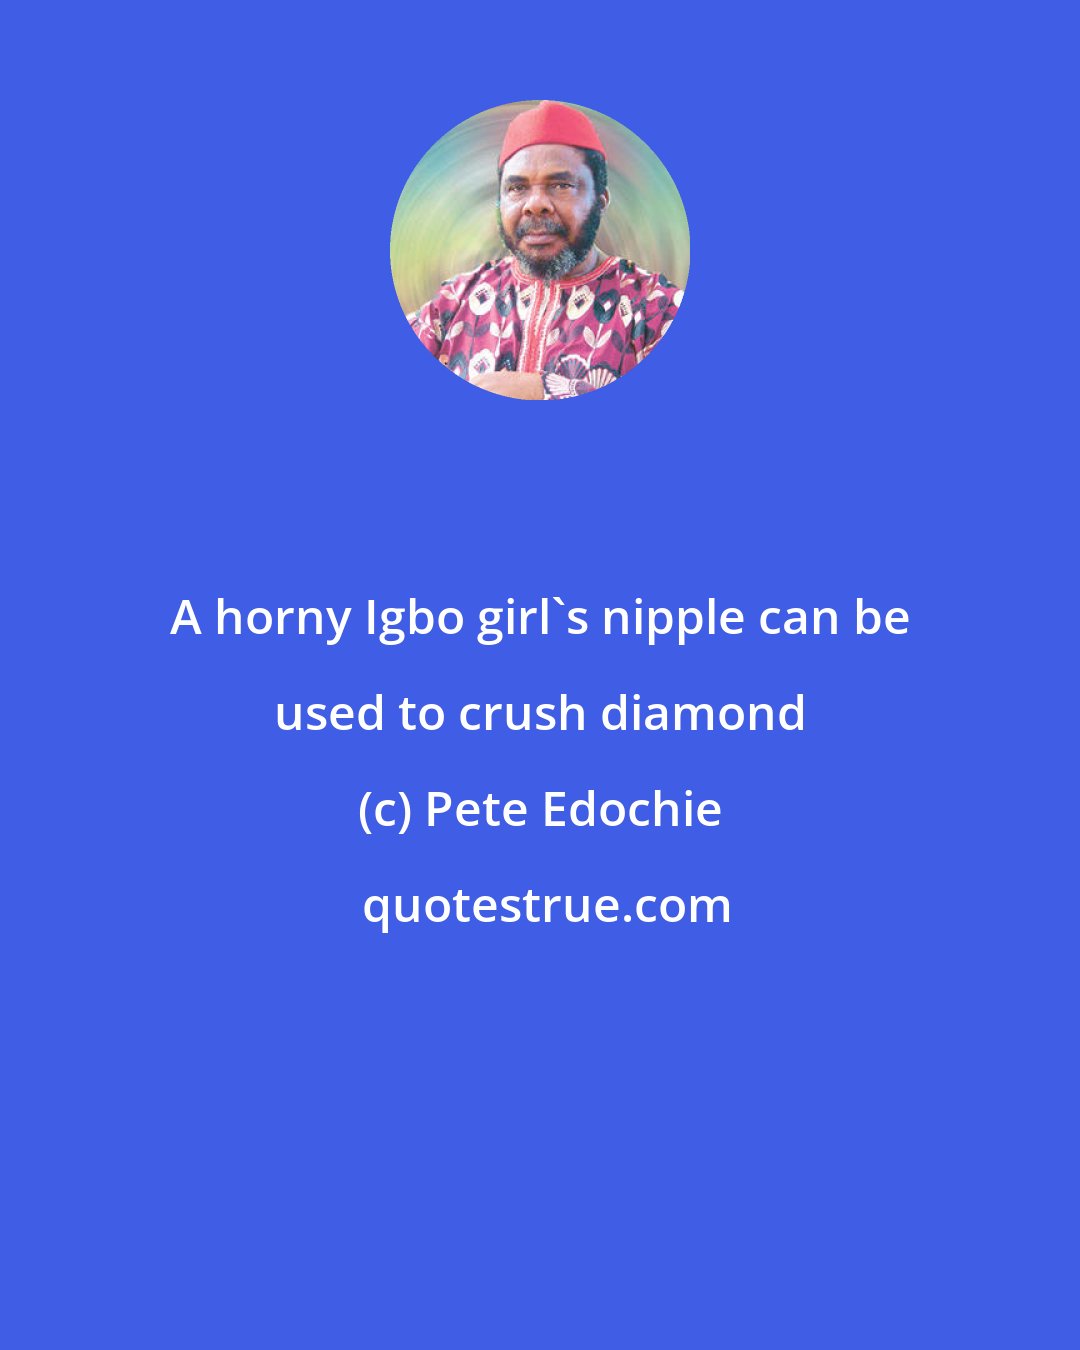 Pete Edochie: A horny Igbo girl's nipple can be used to crush diamond